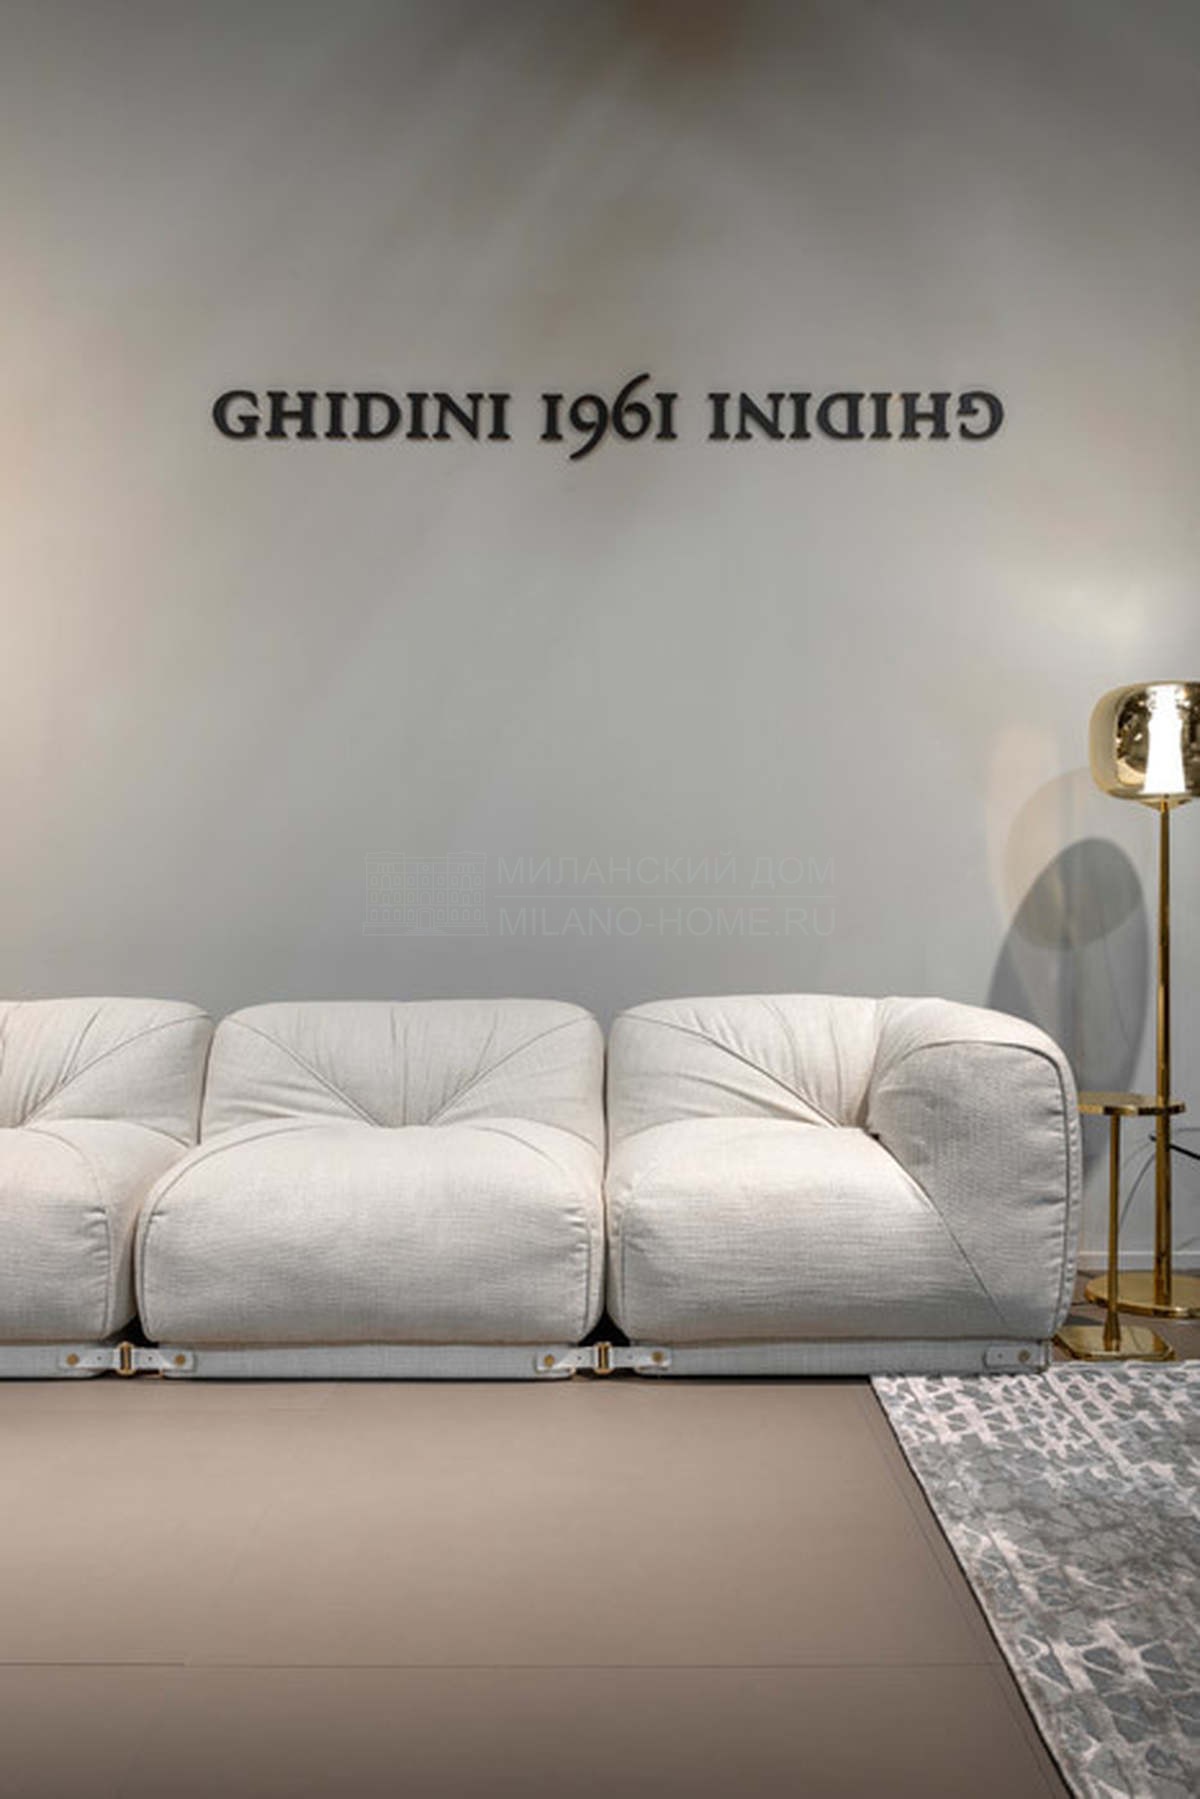 Модульный диван Leisure sofa modular corner из Италии фабрики GHIDINI 1961